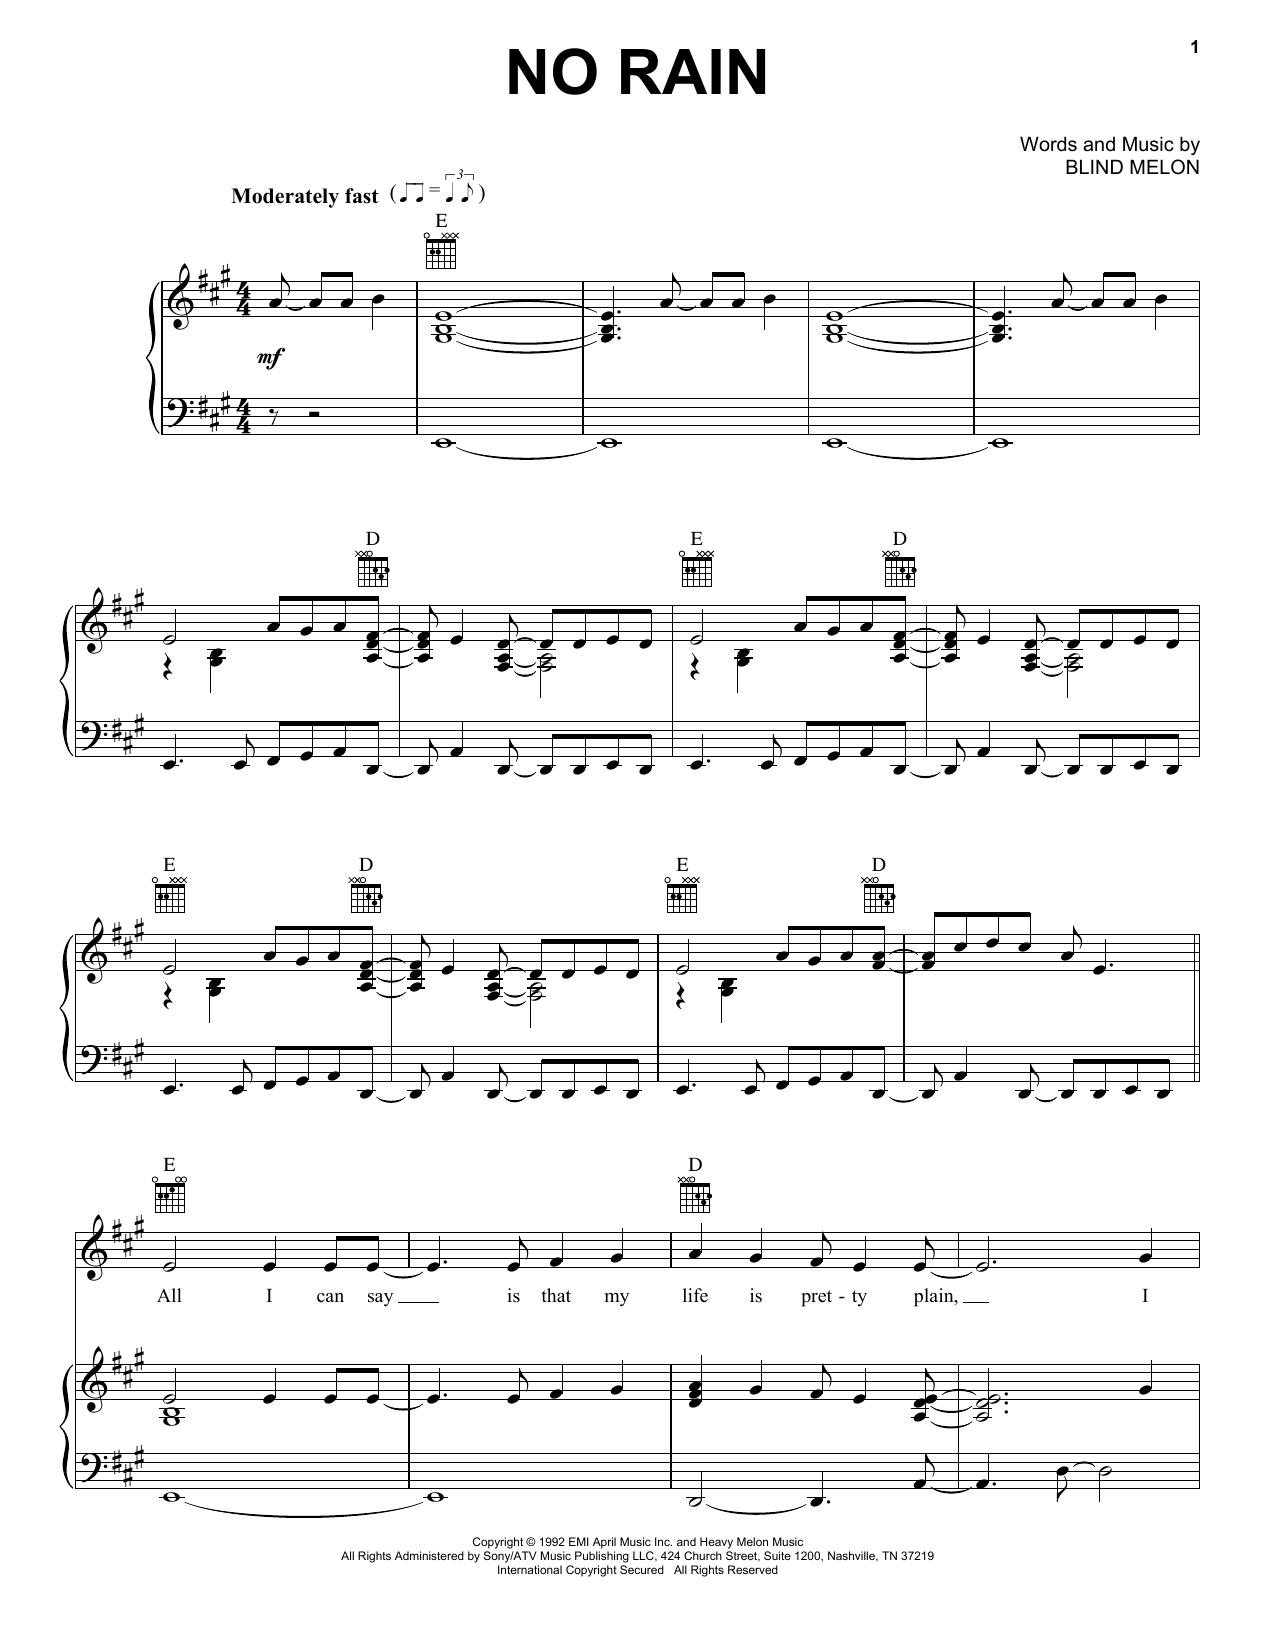 Blind Melon No Rain Sheet Music Notes & Chords for Melody Line, Lyrics & Chords - Download or Print PDF